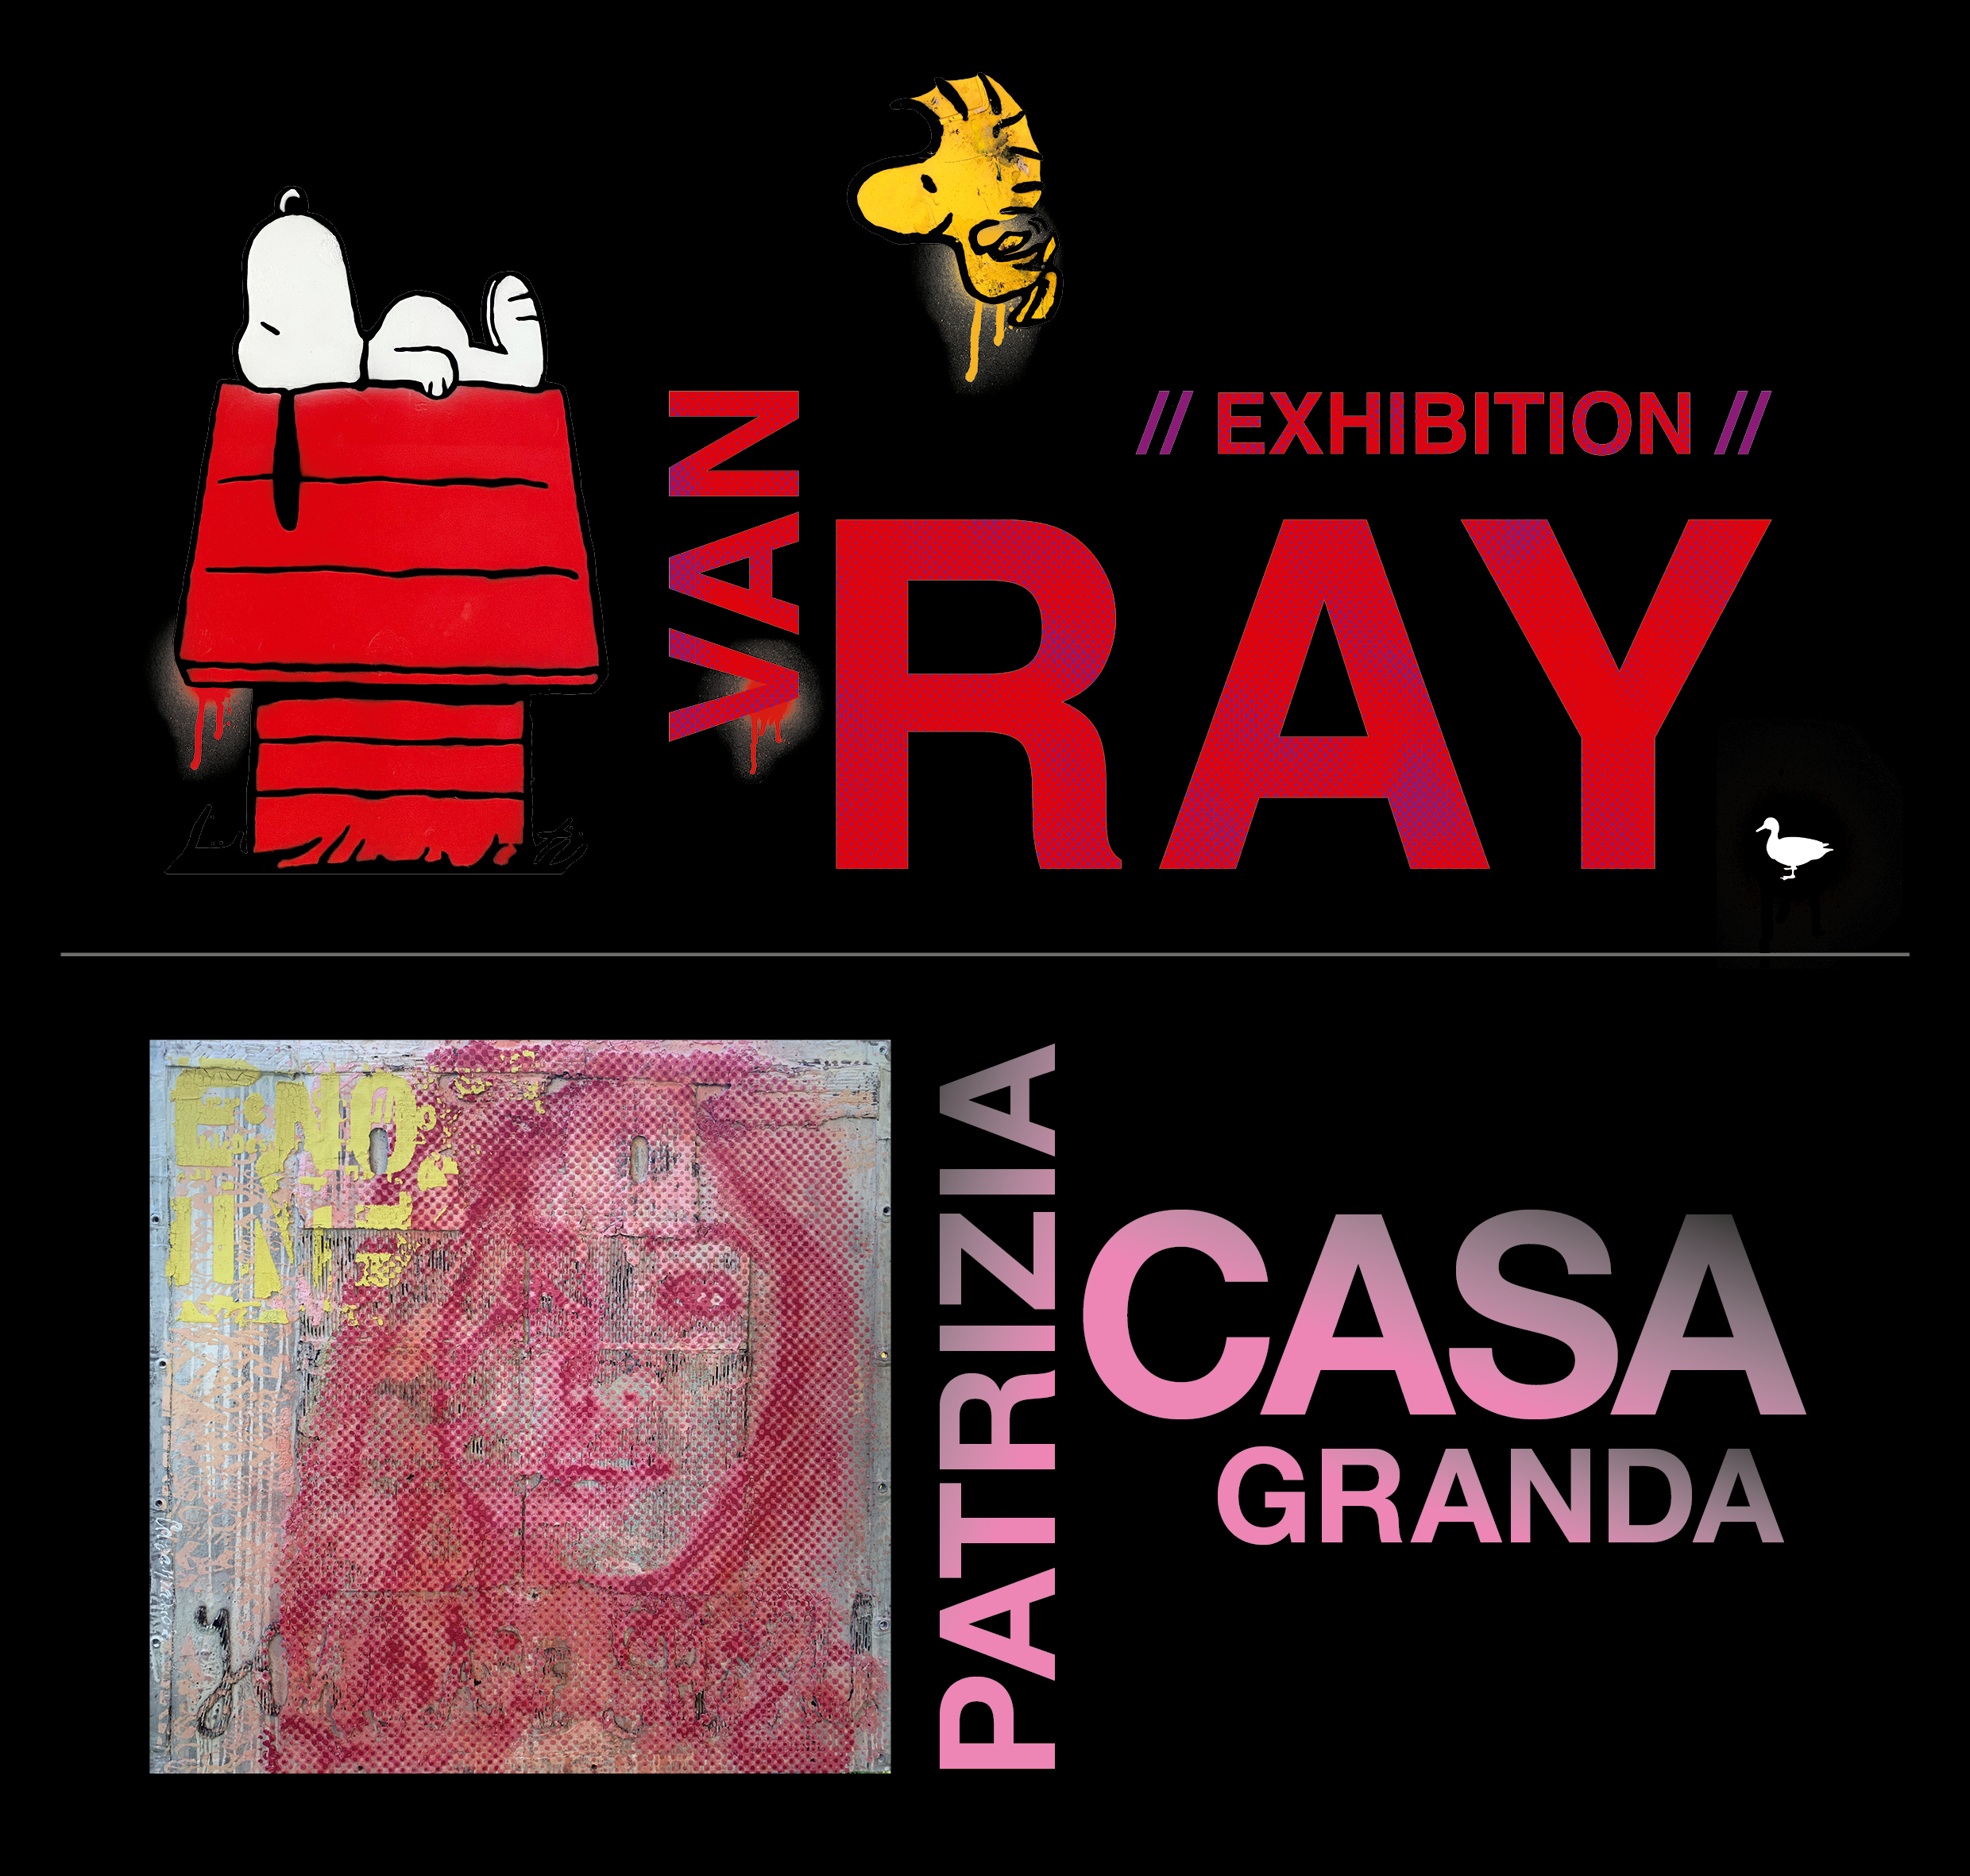 Van Ray & Patrizia Casagranda – Together We Rise – Art Gallery Wiesbaden